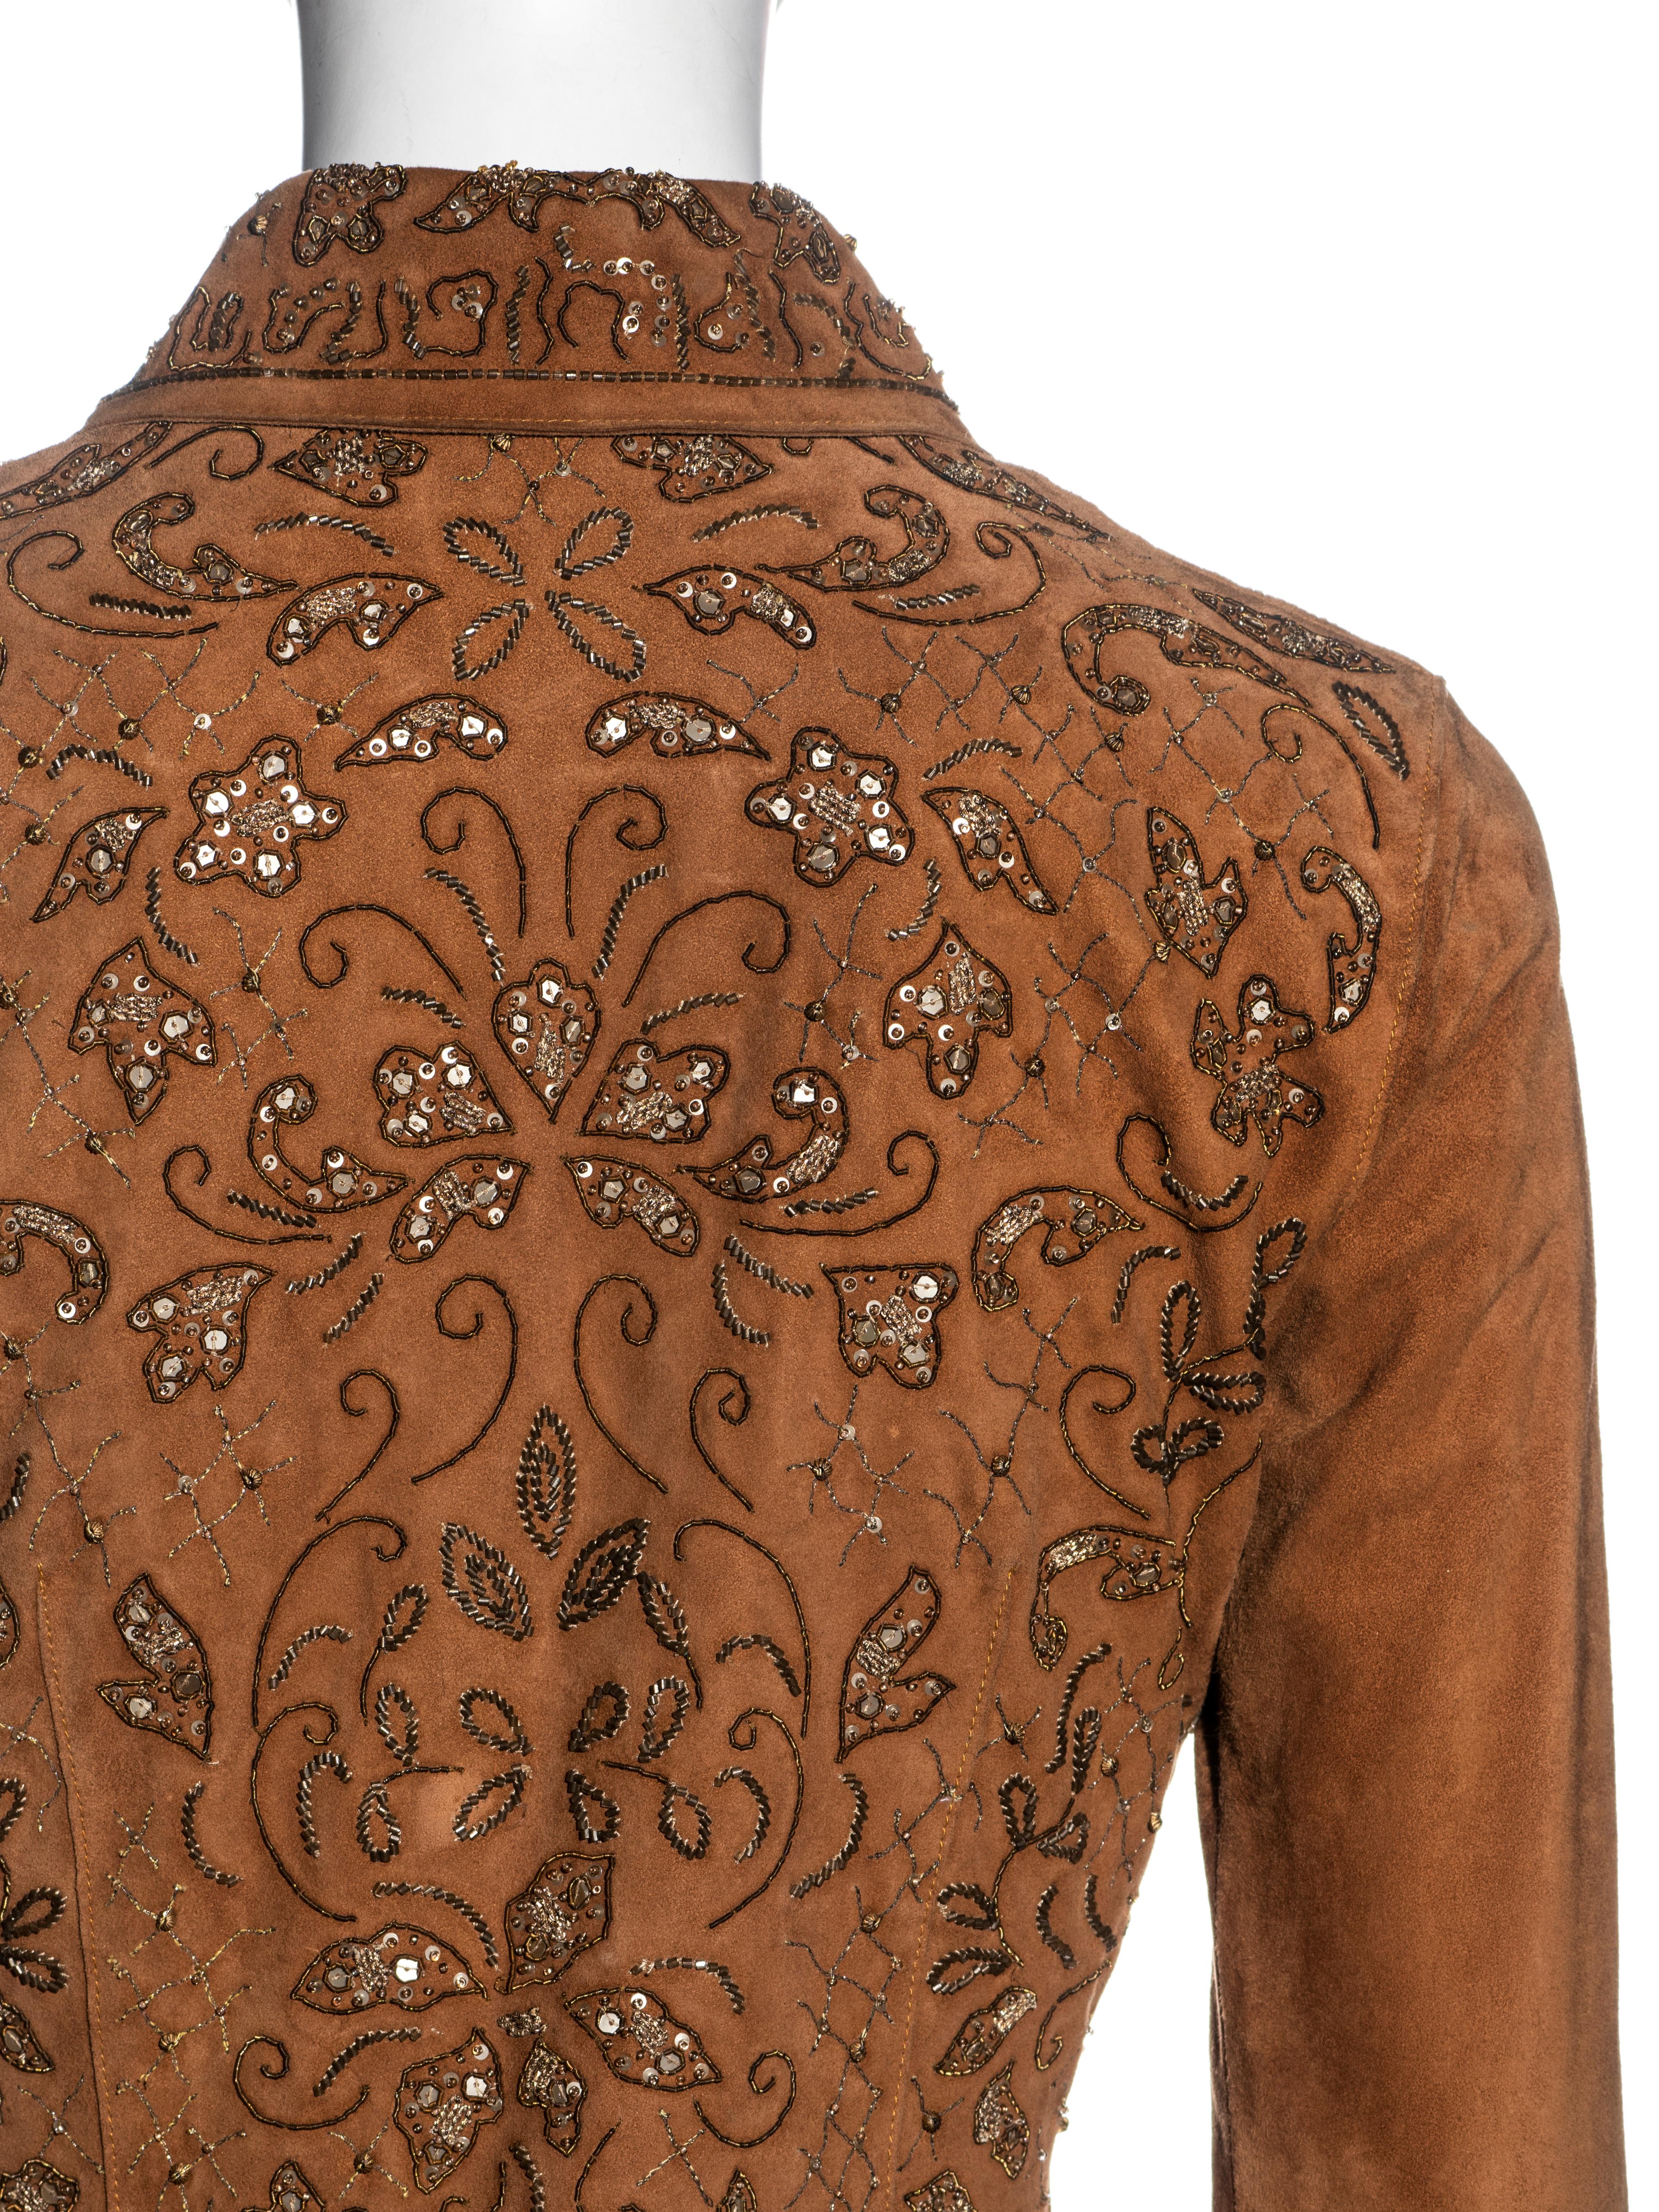 Dolce & Gabbana brown goat suede embellished shirt, ss 2001 For Sale 5